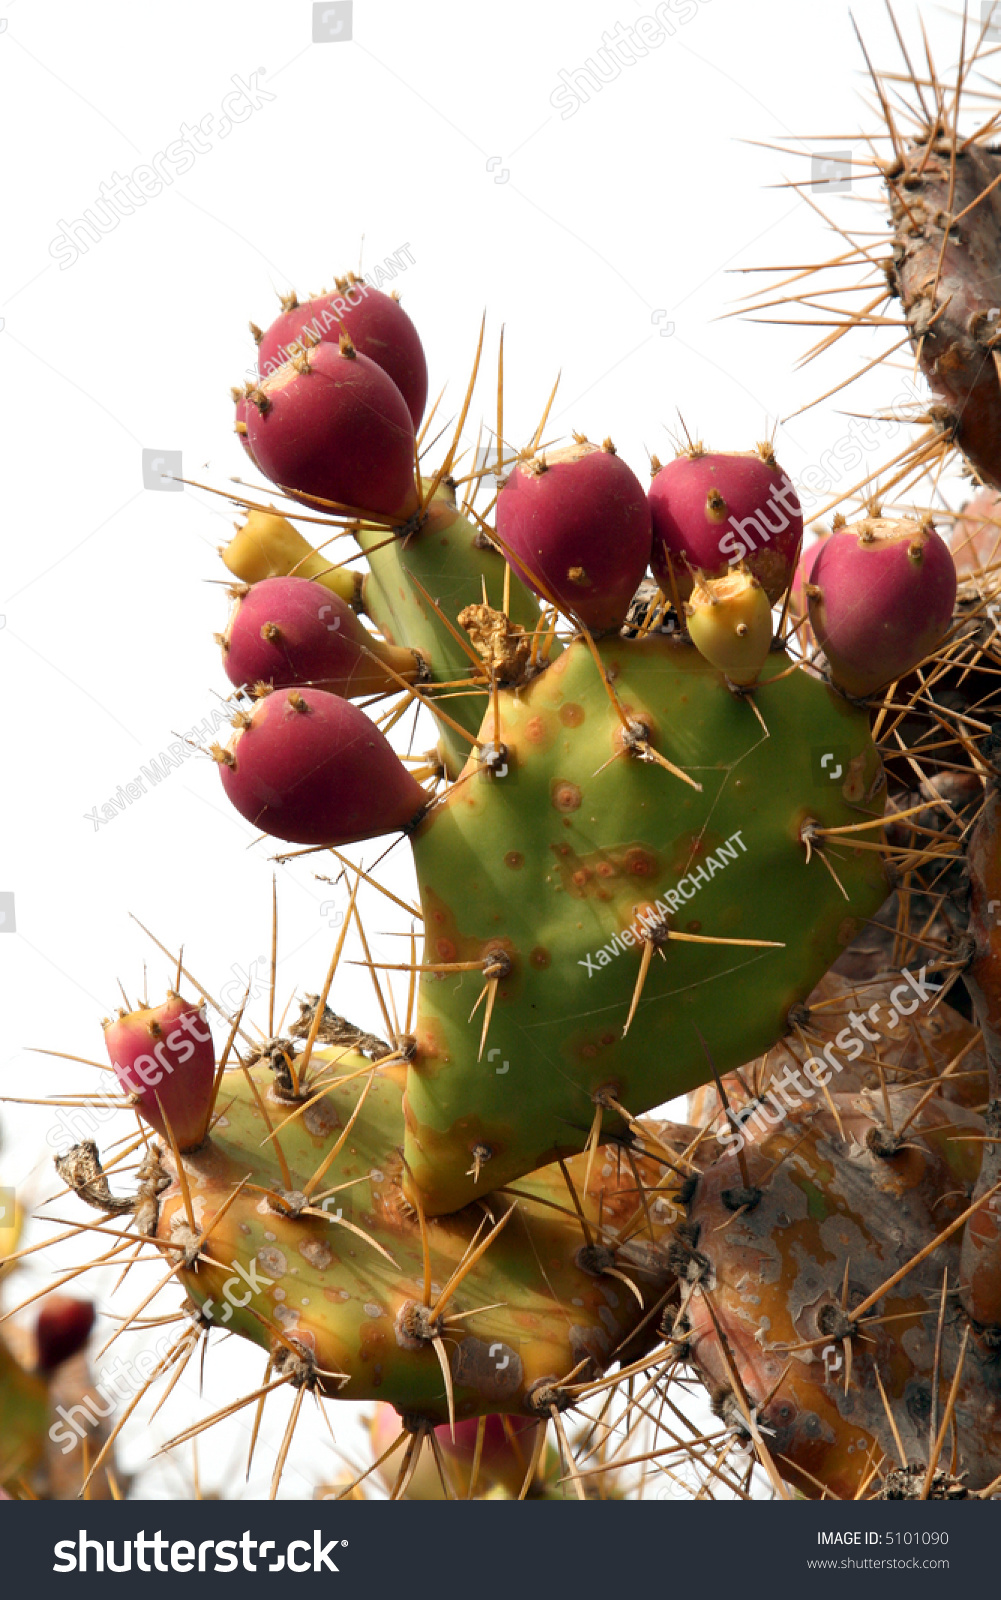 big red cactus fruits on a leaf #5101090